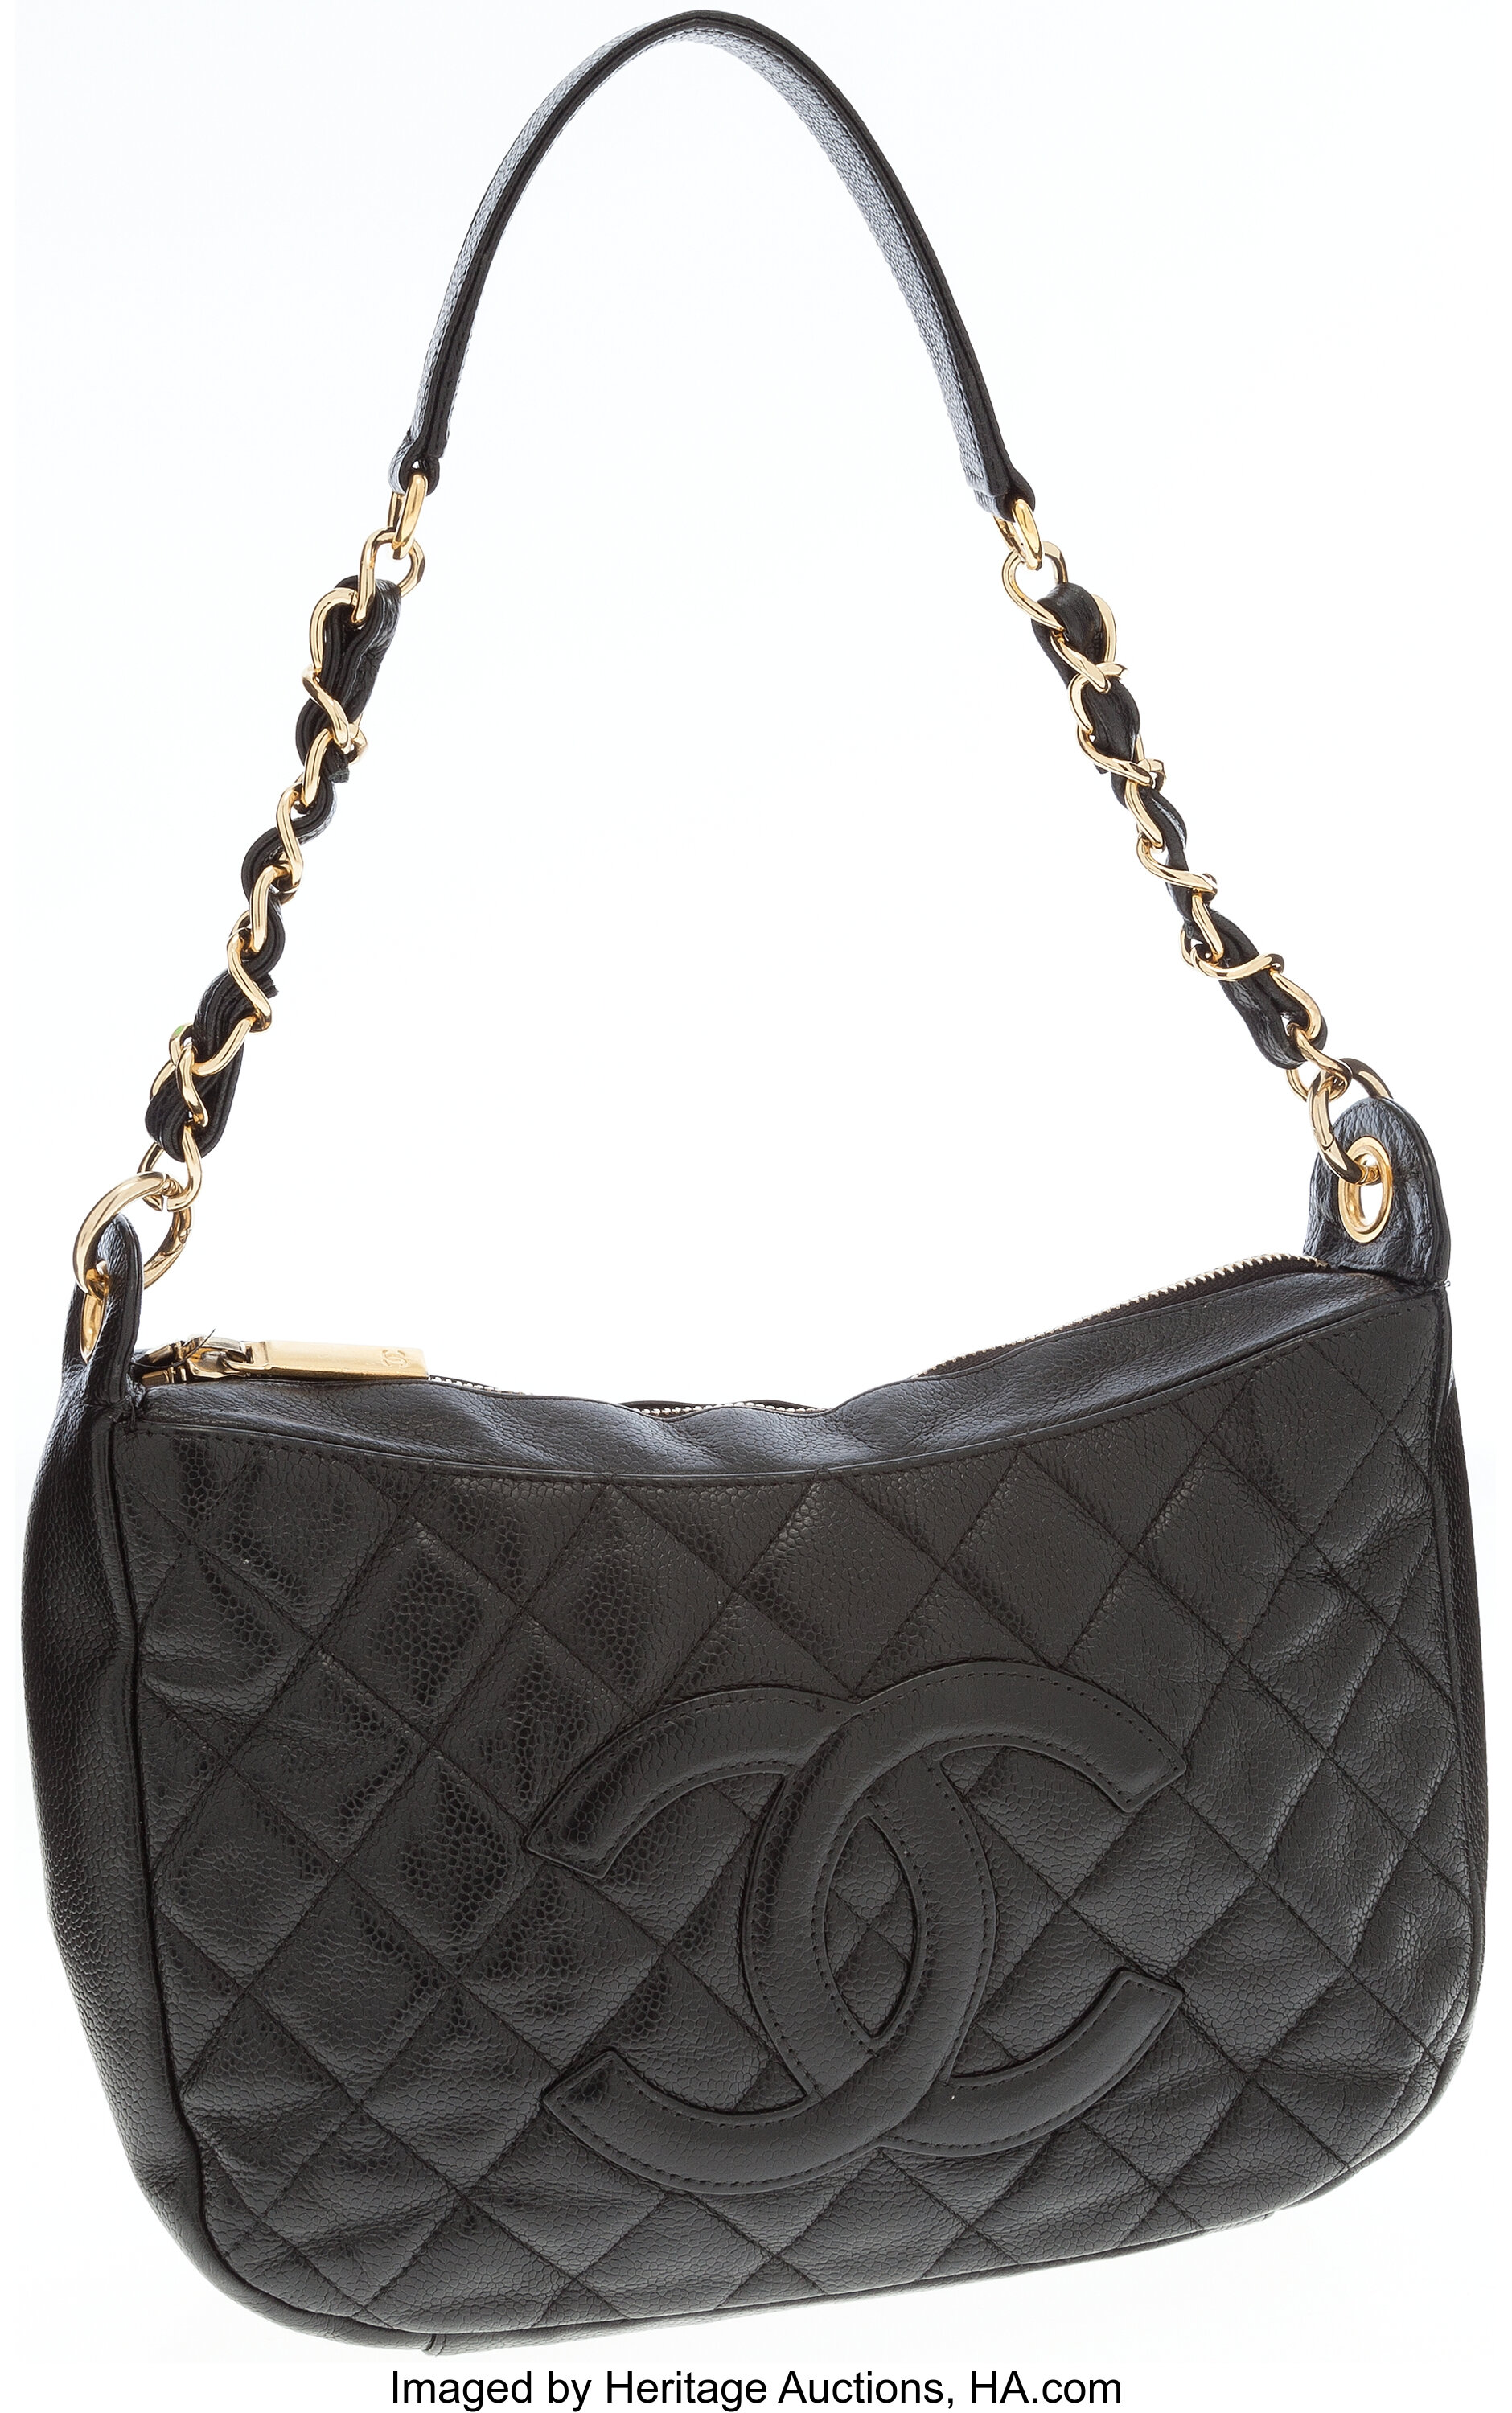 Chanel Black Caviar Leather Half Moon Hobo Bag with Gold Hardware ...